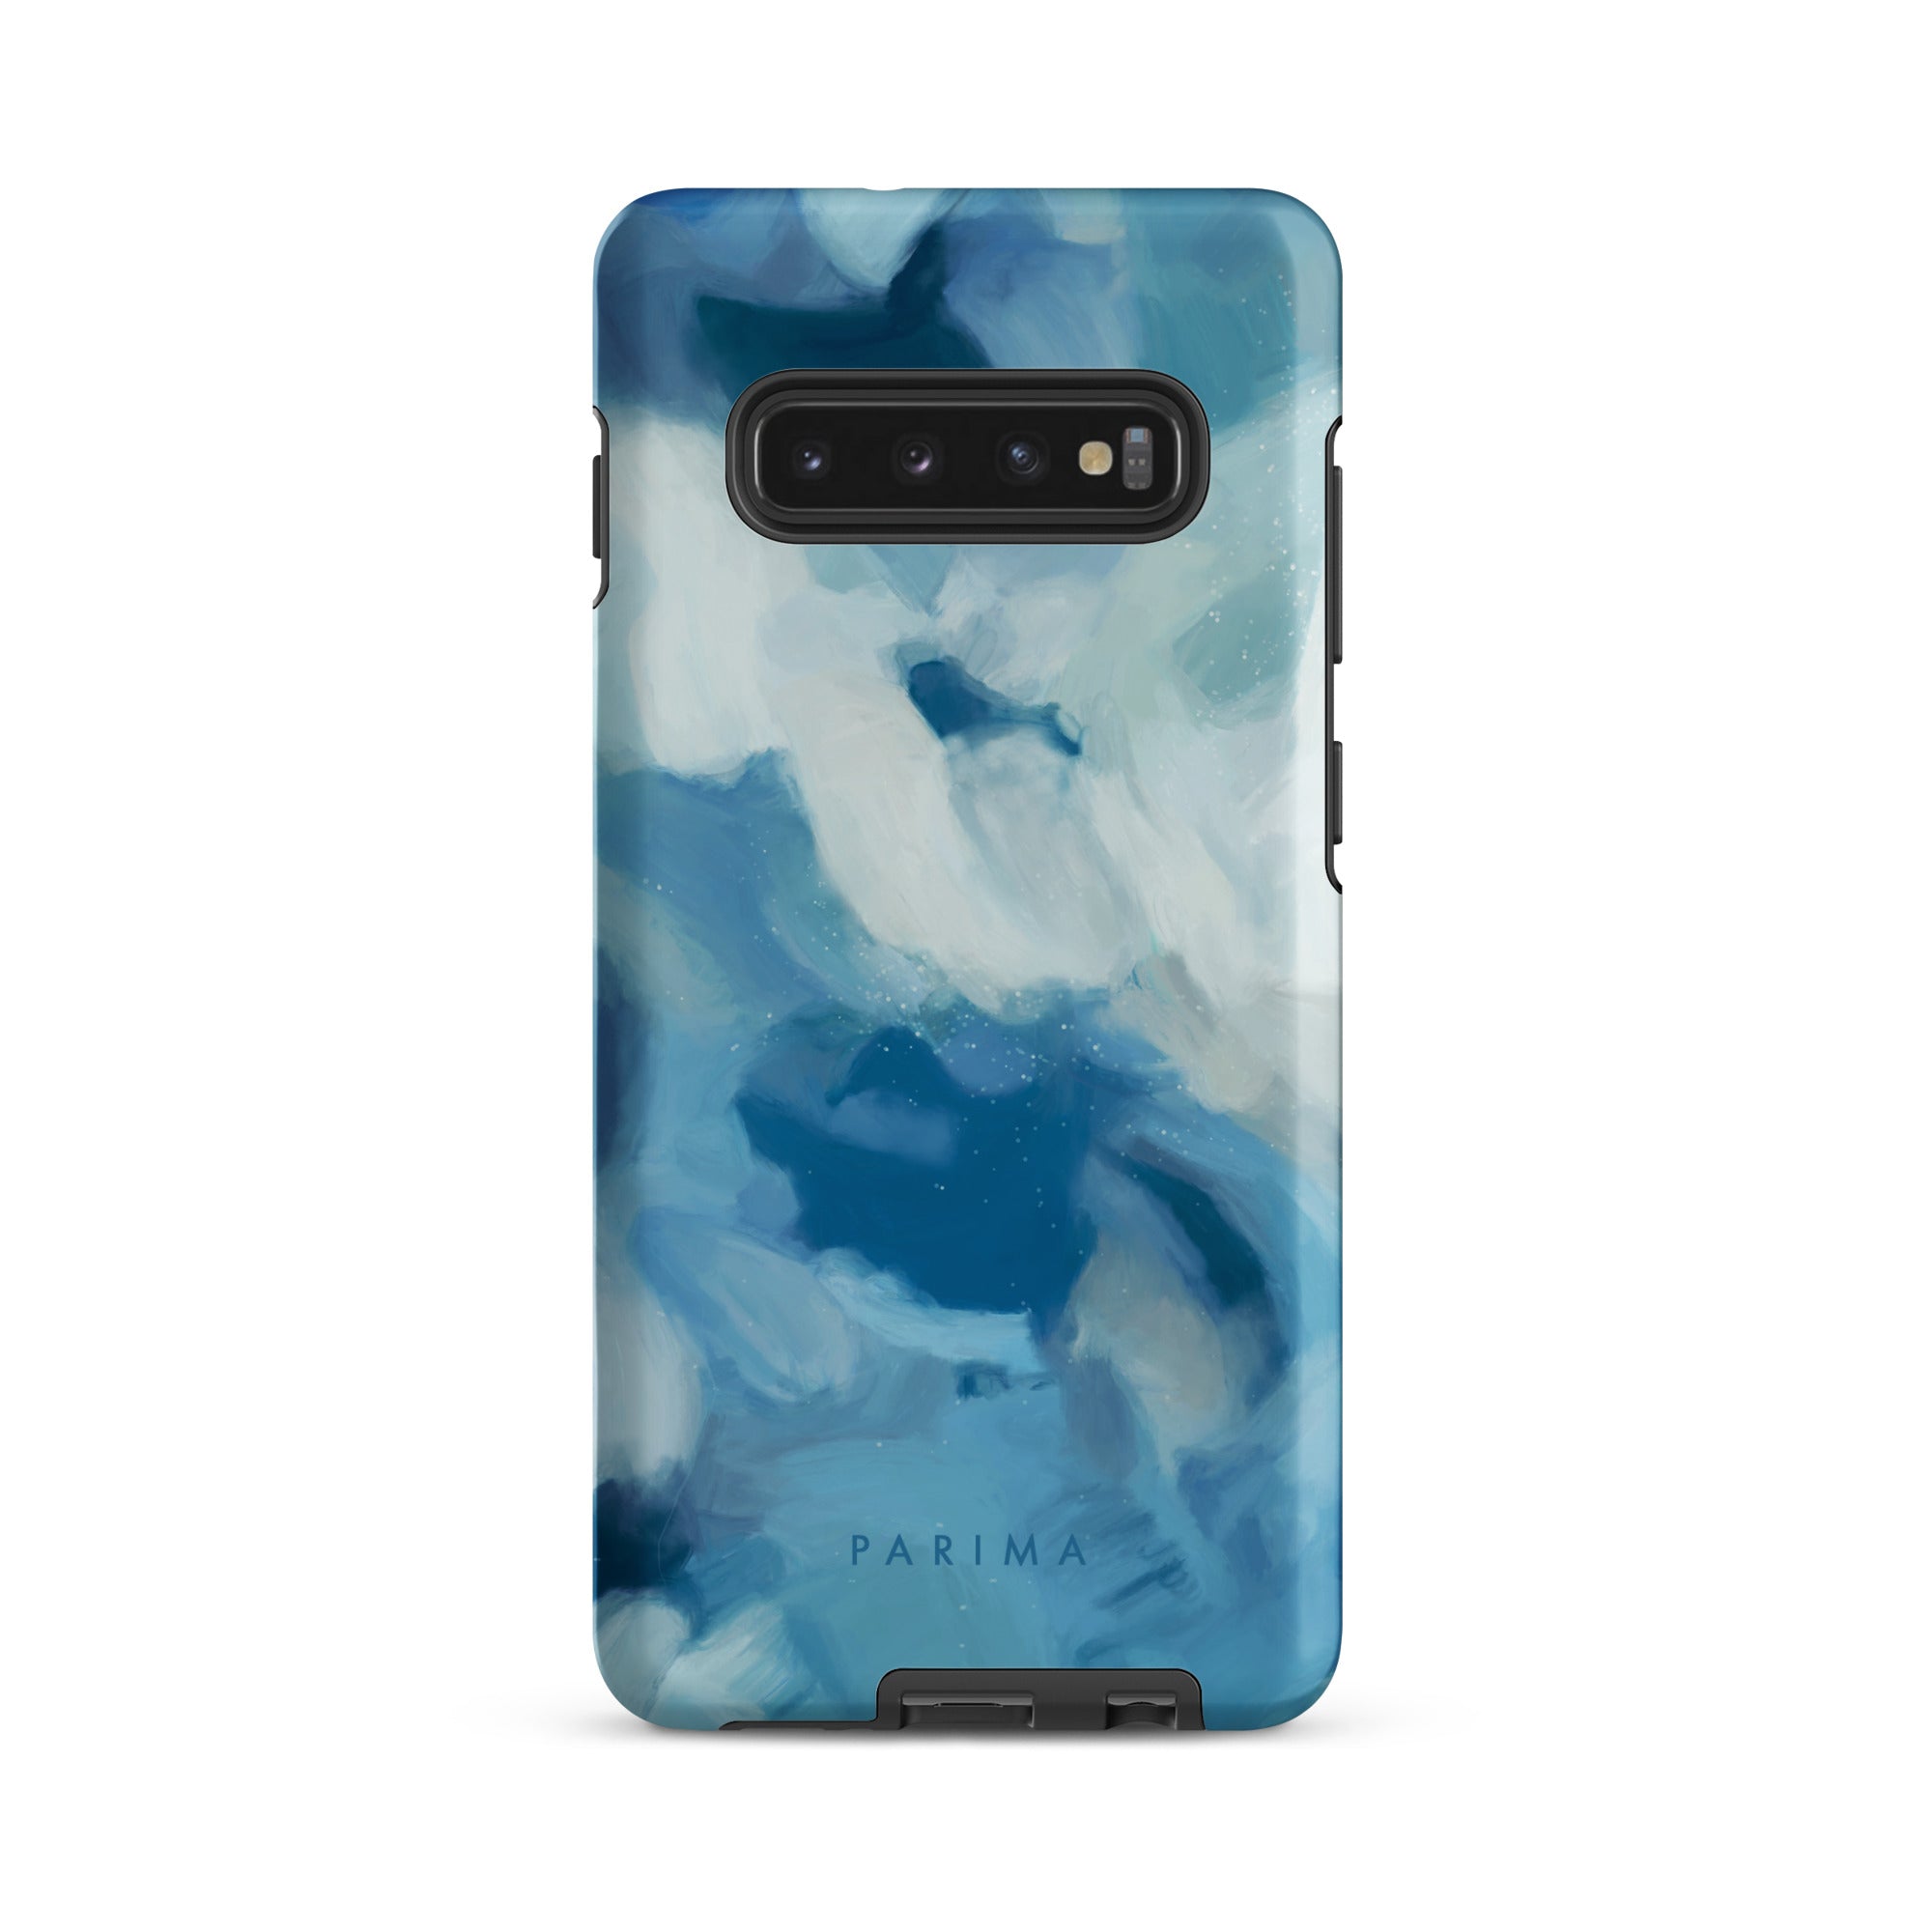 Liviana, blue abstract art on Samsung Galaxy S10 plus tough case by Parima Studio